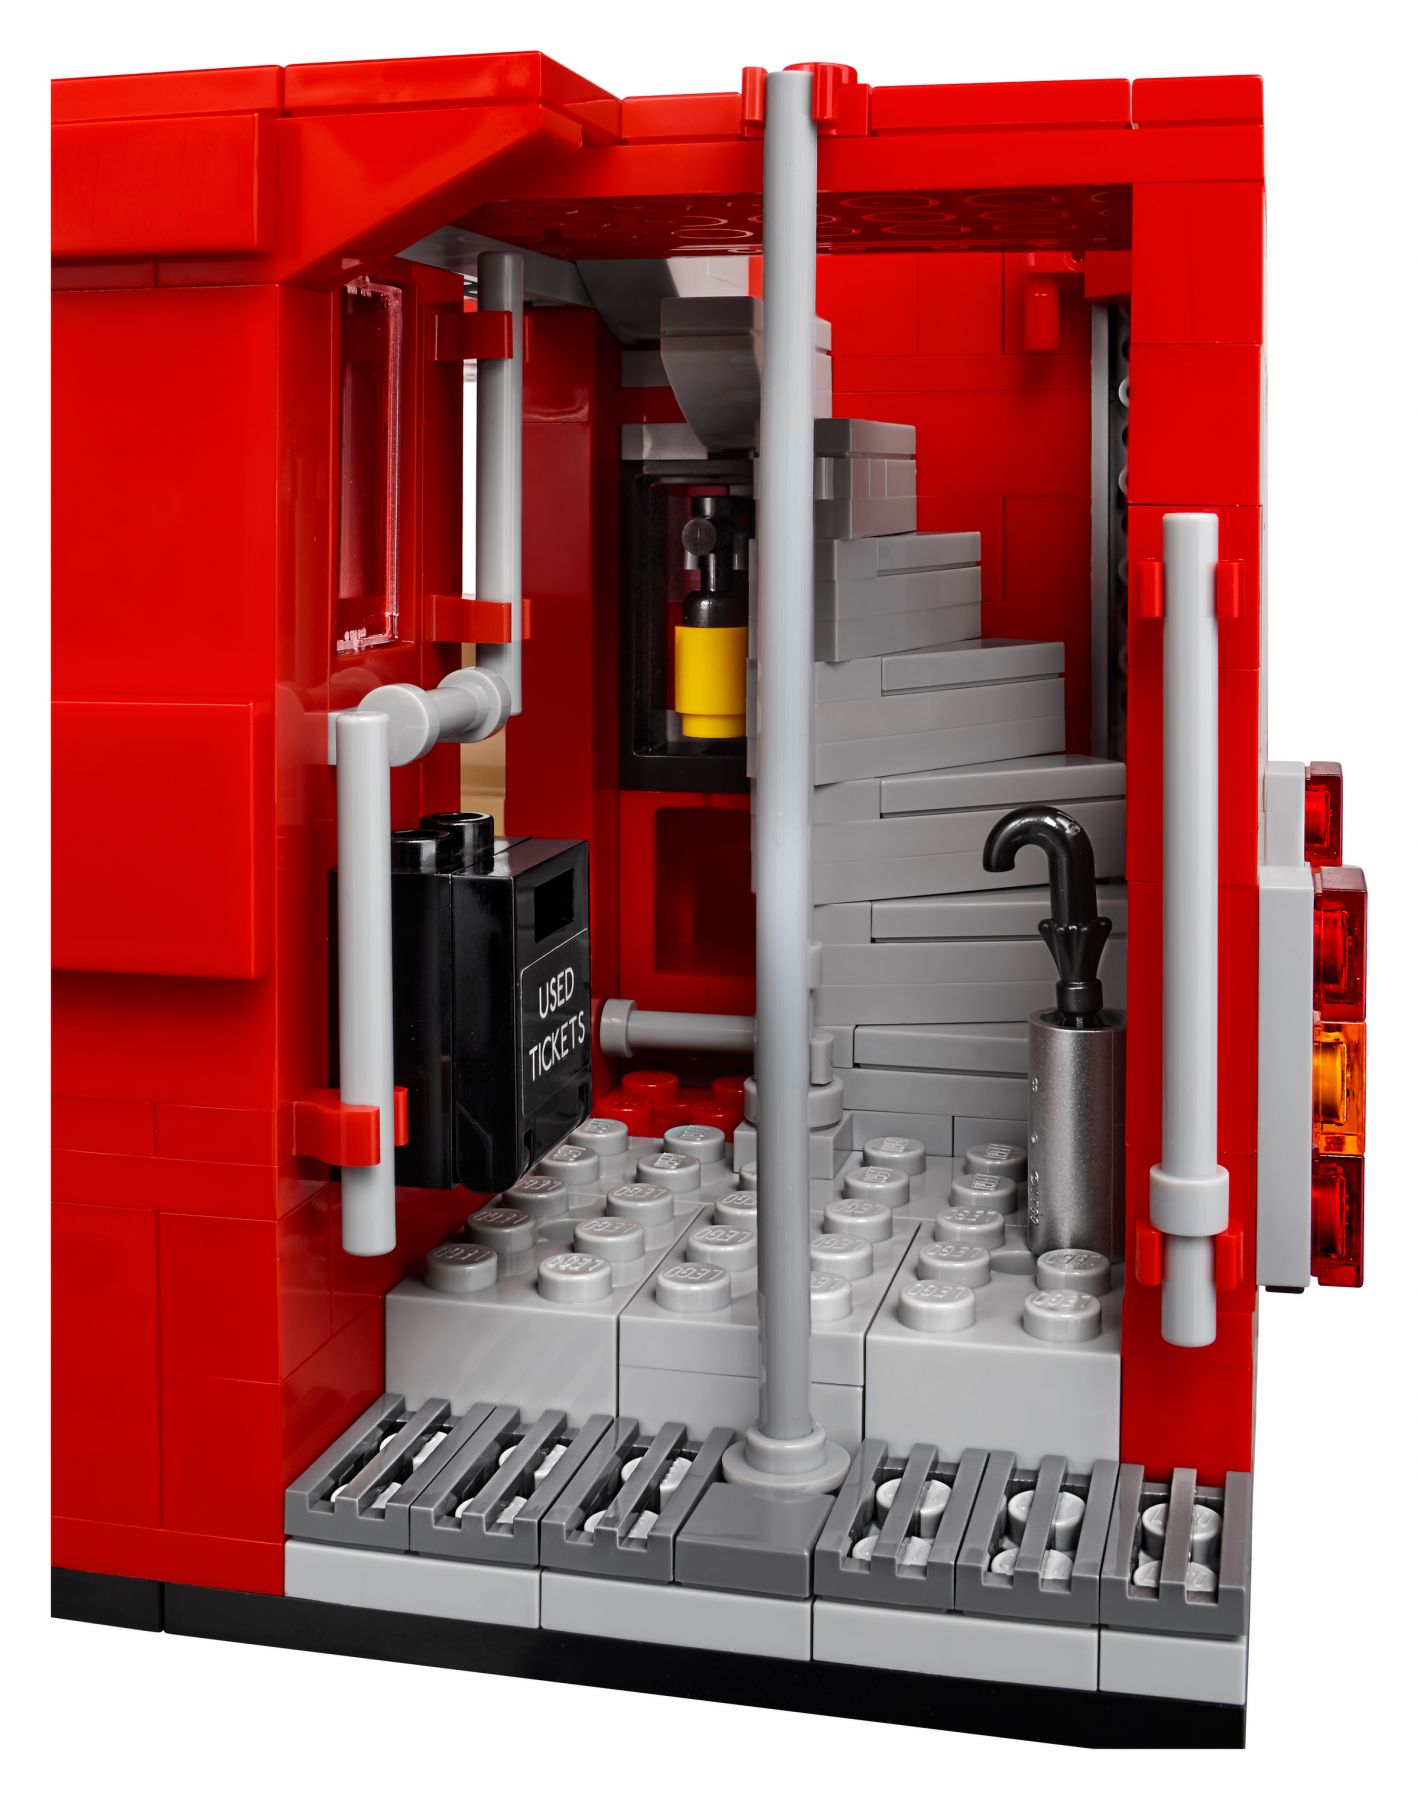 LEGO Advanced Models 10258 Doppeldecker Bus LEGO_10258_alt14.jpg